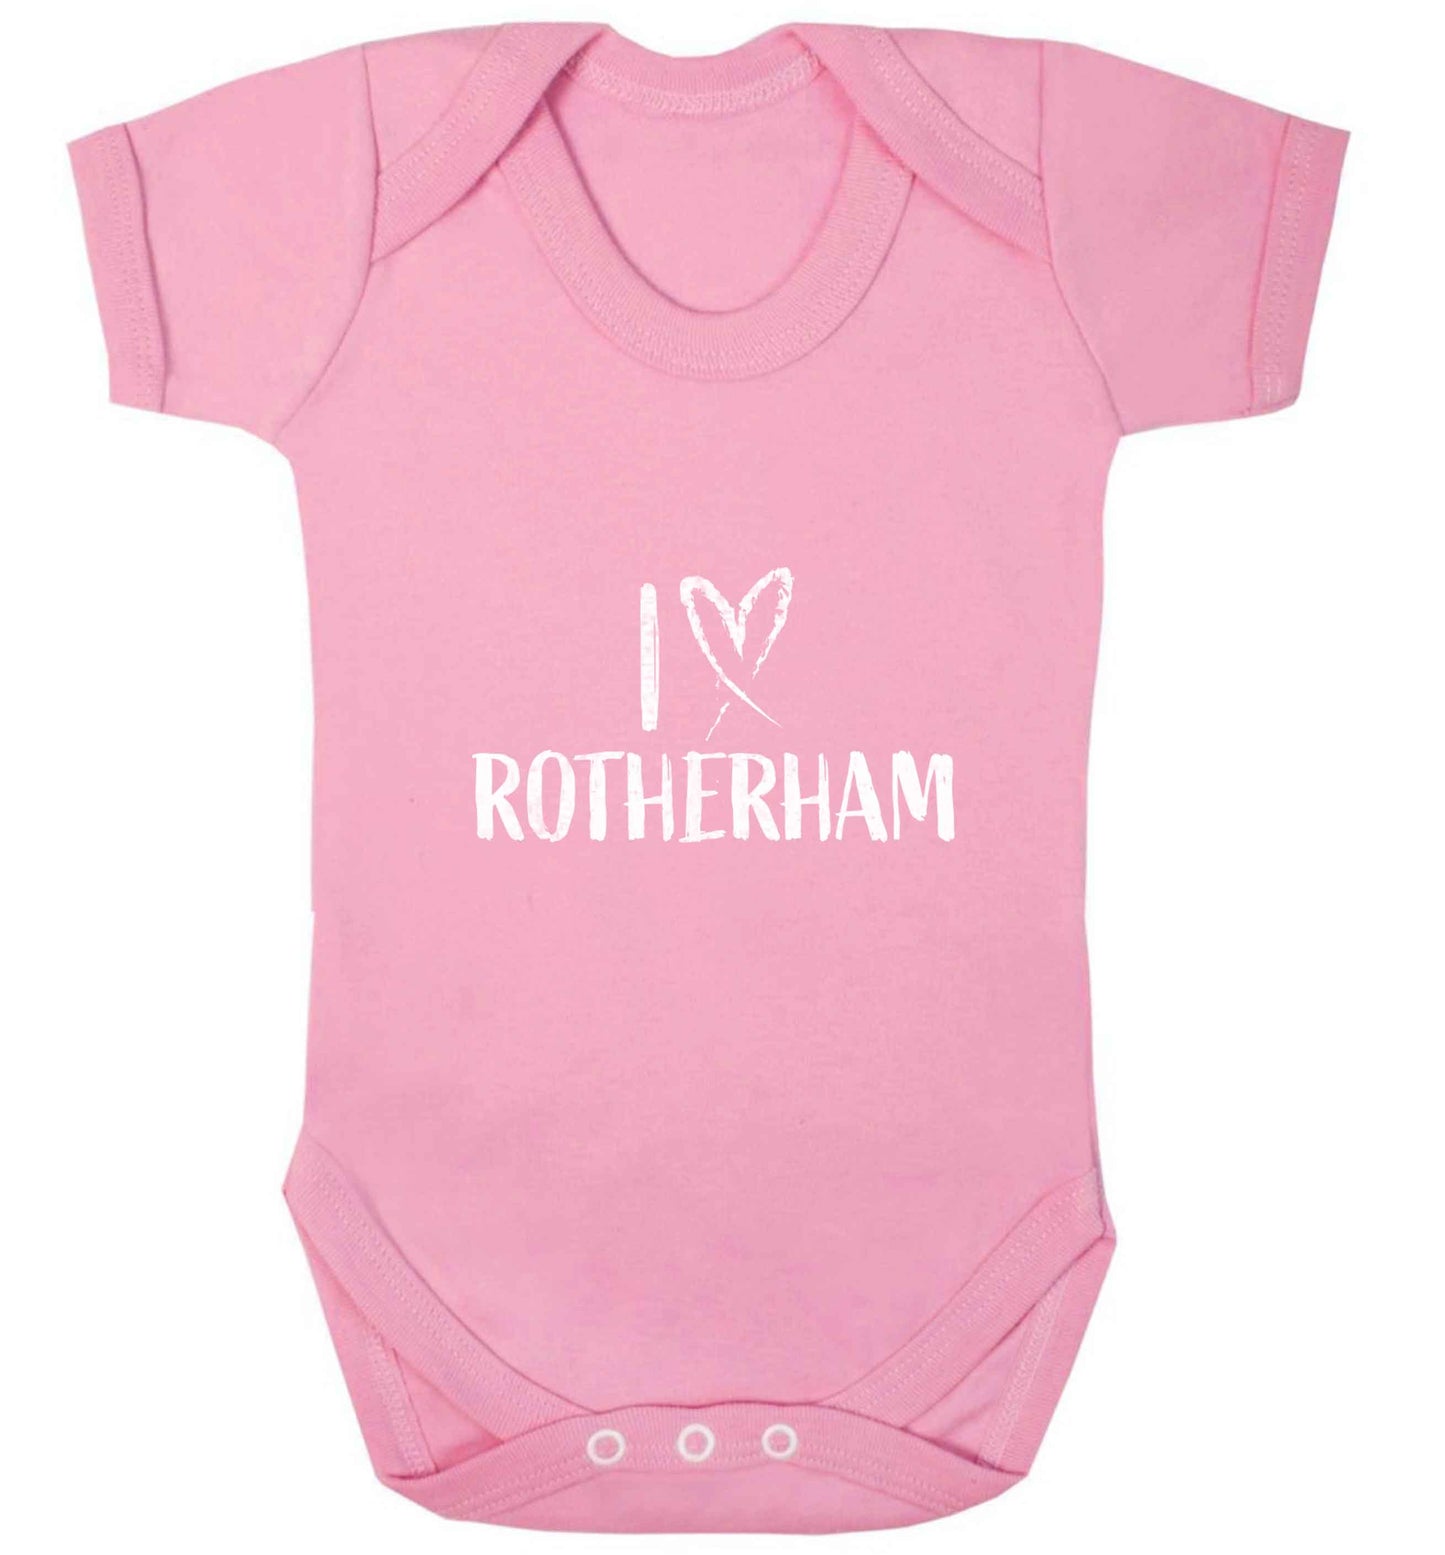 I love Rotherham baby vest pale pink 18-24 months